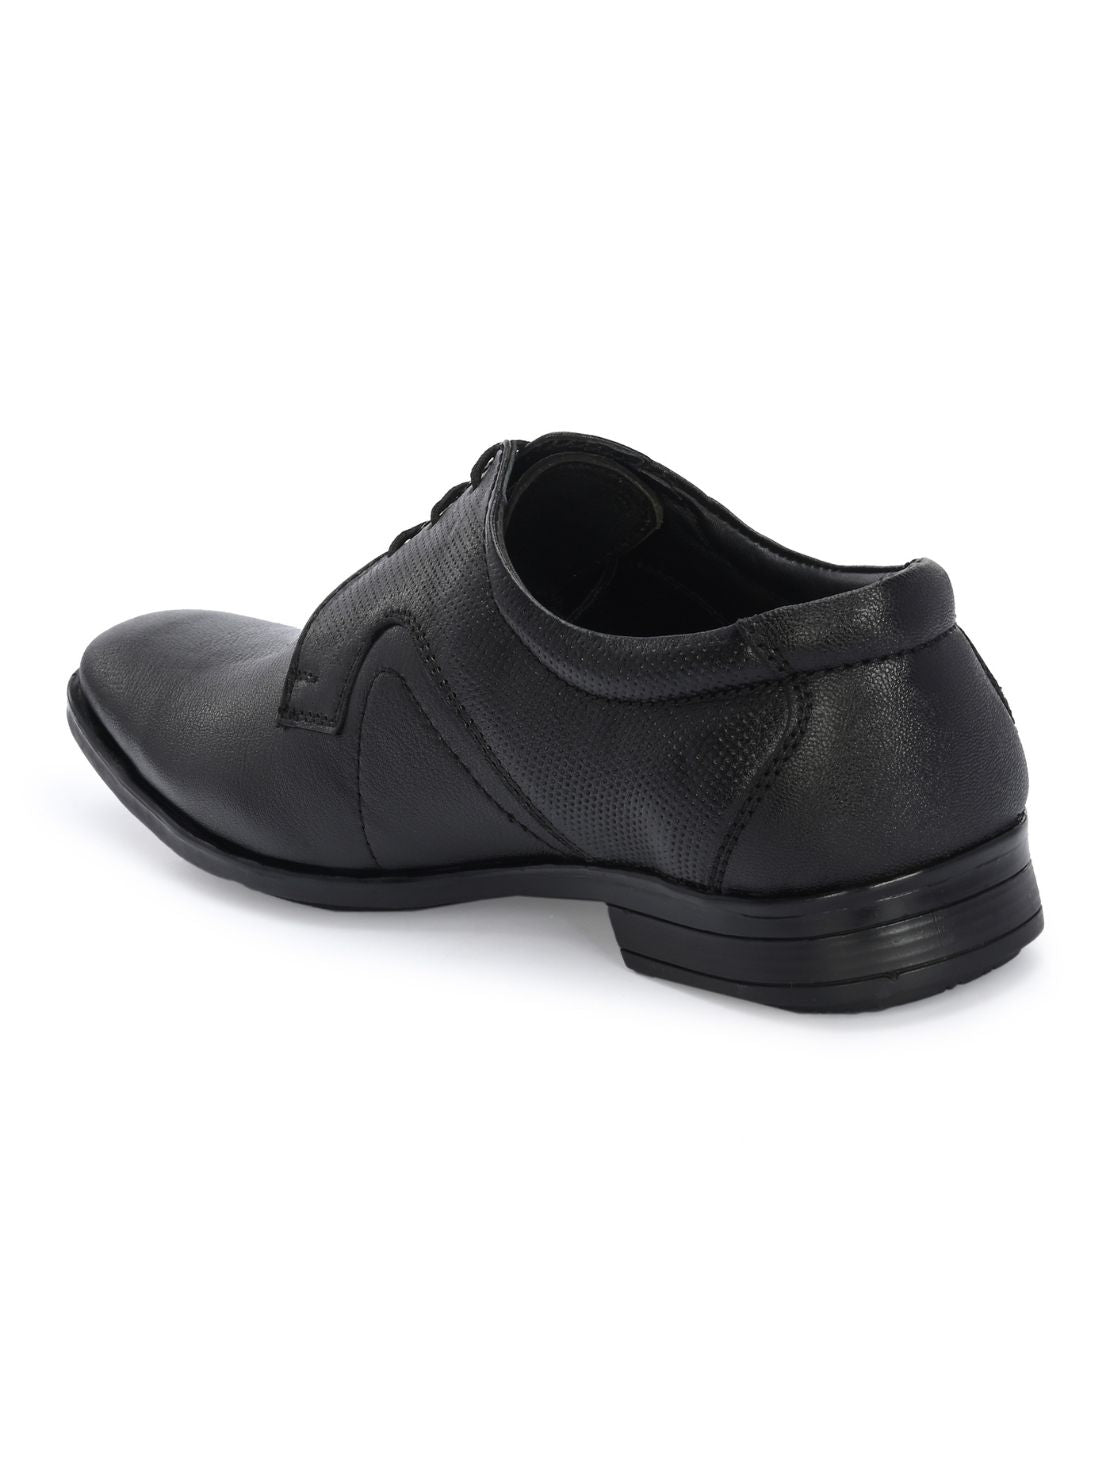 Guava Men's Black Leather Derby Formal Shoes Lace-Up GV15JA871